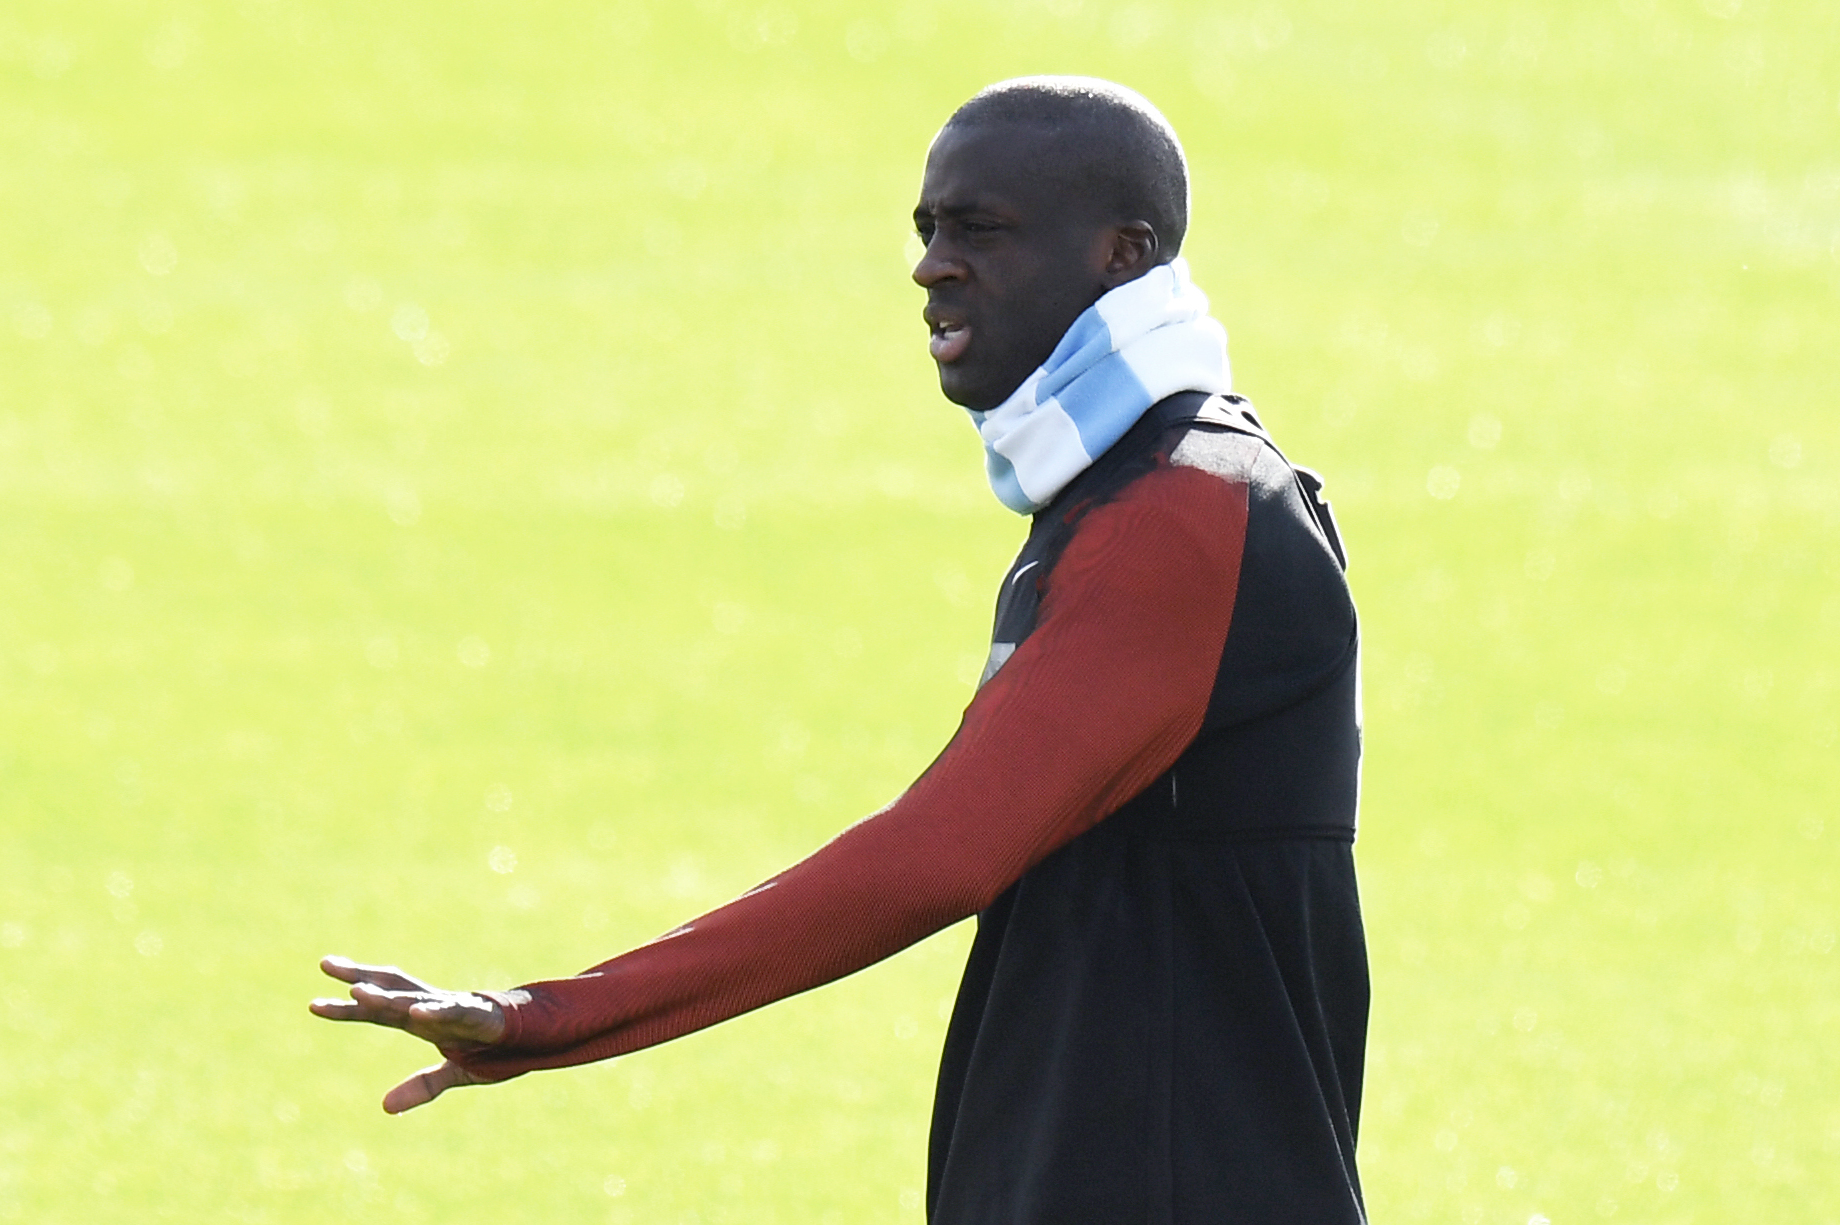 Yaya Toure transfer news: Manchester City midfielder would jump at